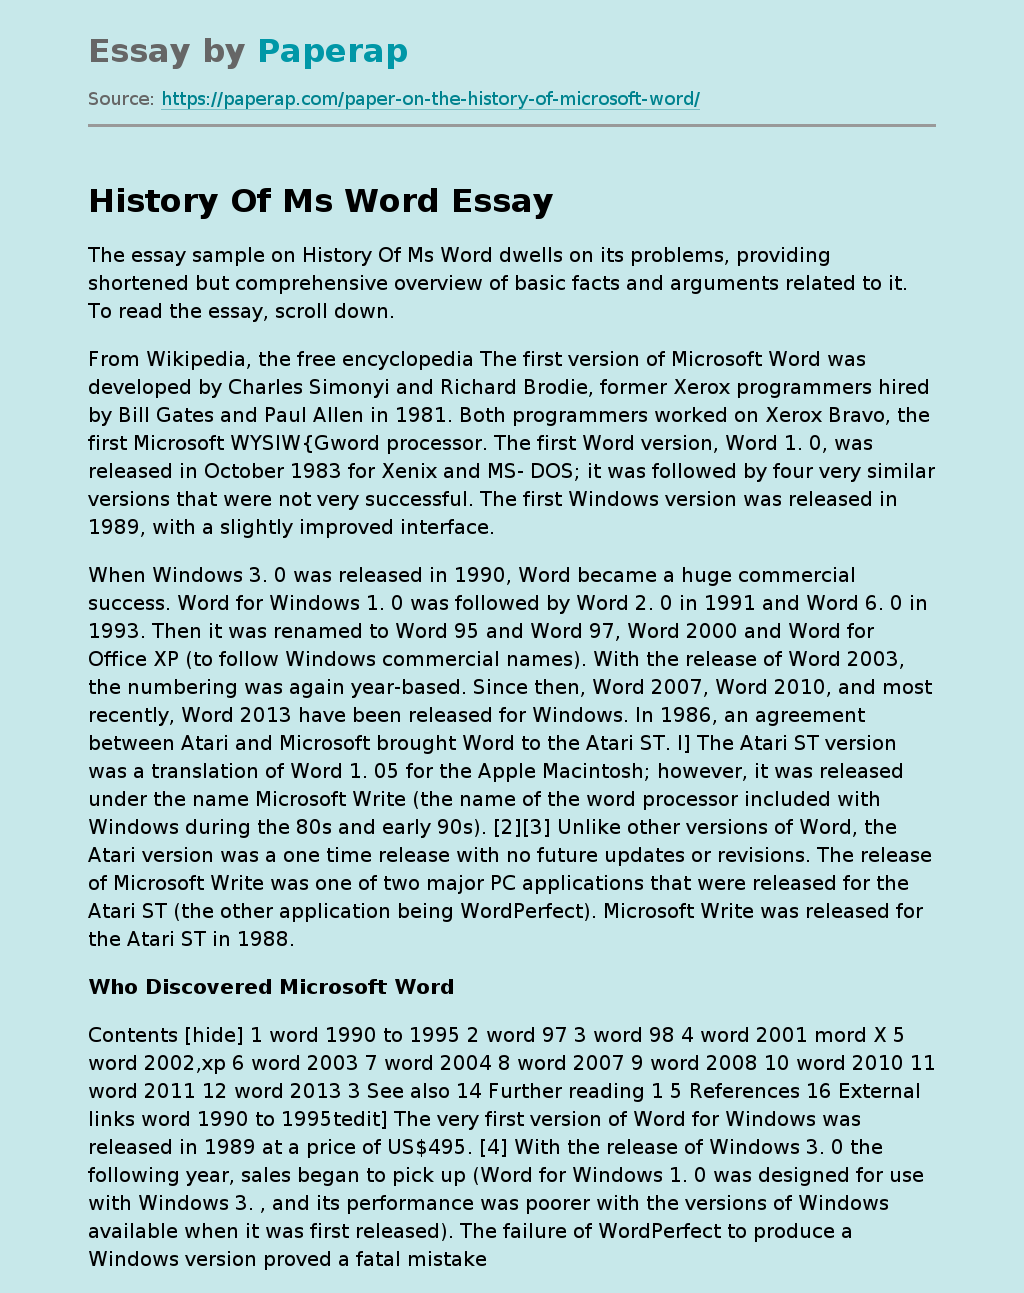 Essay Sample on History of MS Word